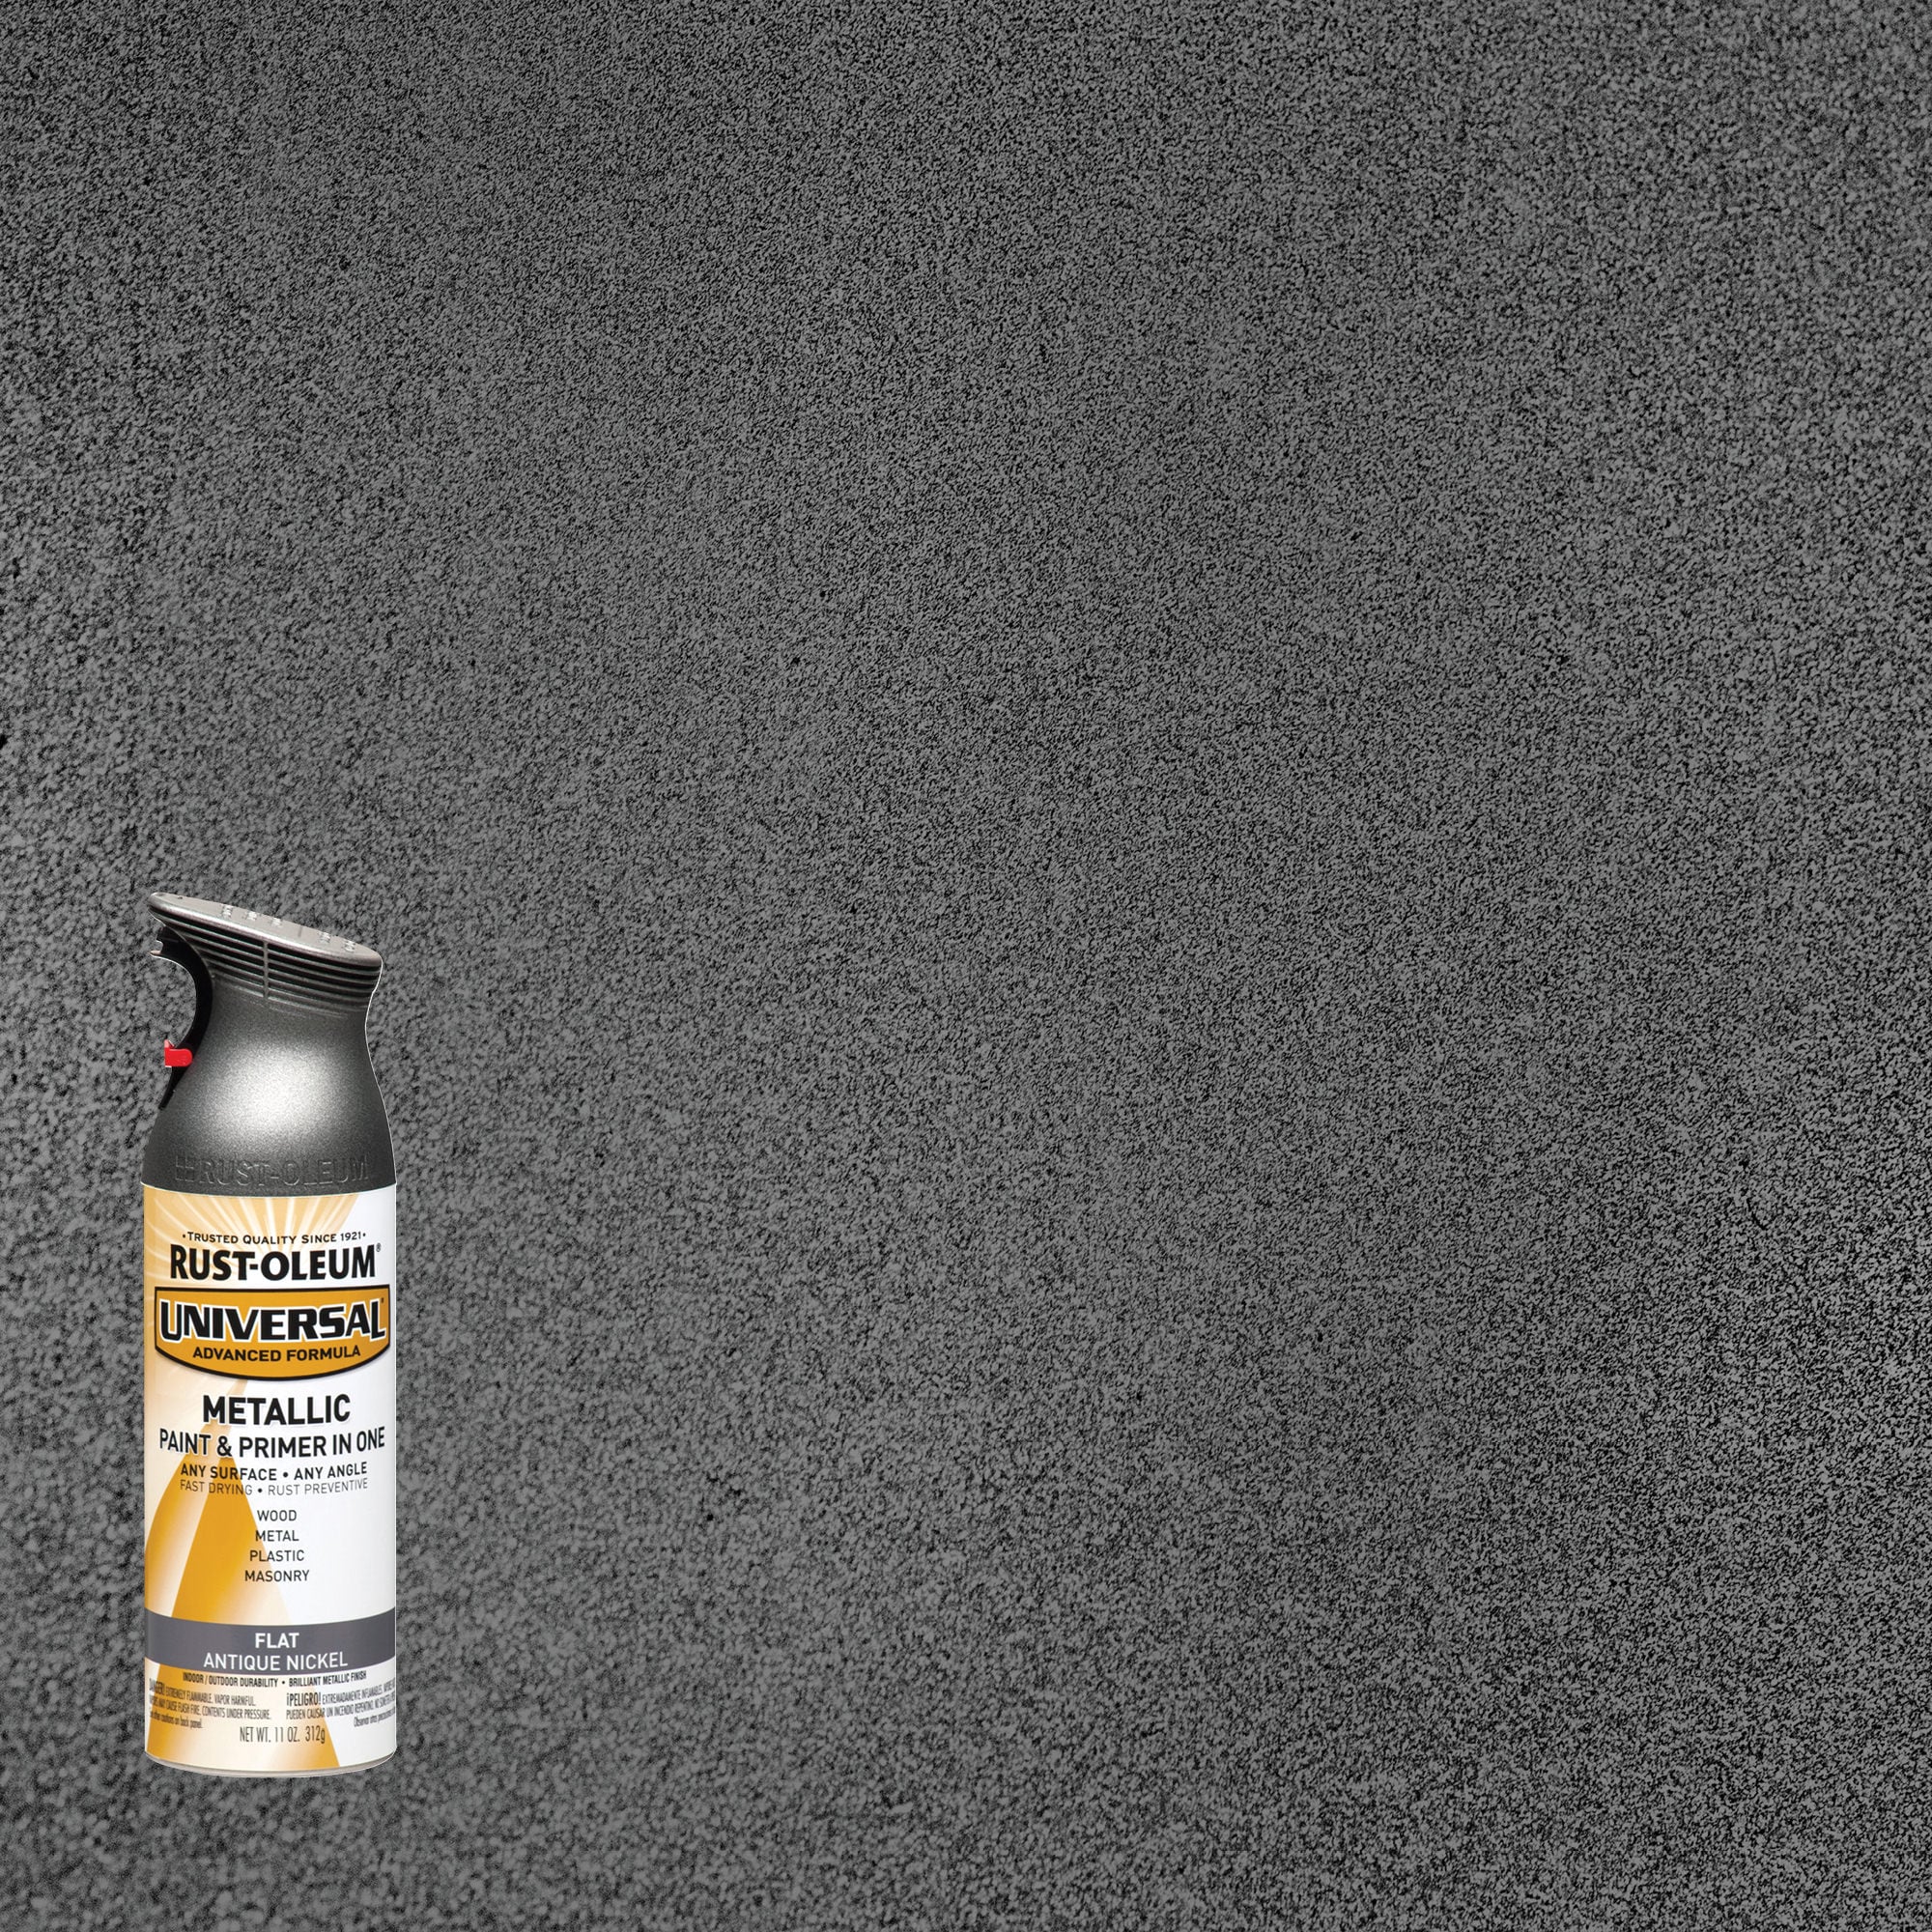 WEATHERED BLACK 4.5 oz. Spray Can